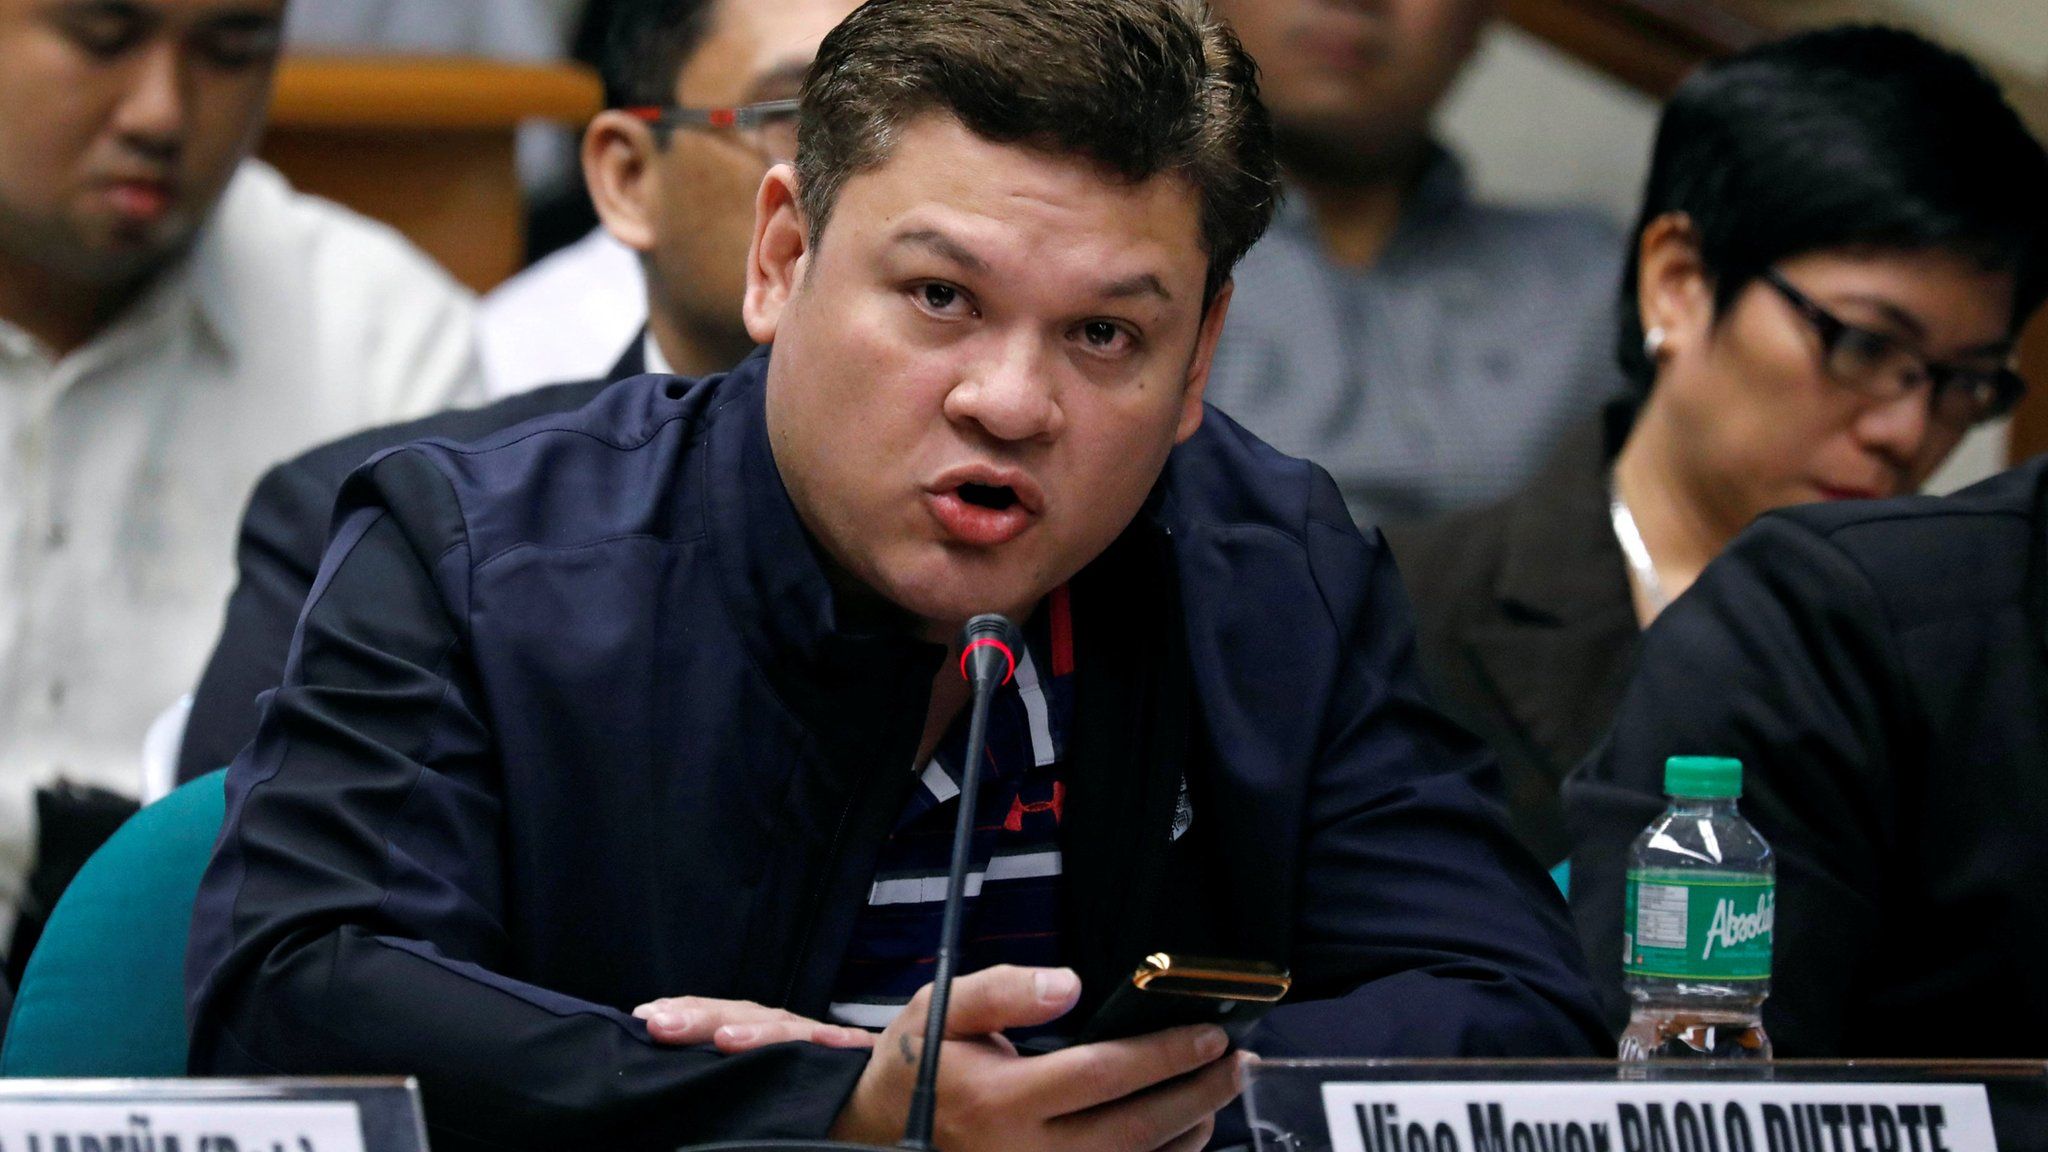 Paolo Duterte, Davao's Vice Mayor and son of President Rodrigo Duterte, testifies at a Senate hearing on drug smuggling in Pasay, Metro Manila, Philippines, 7 September 2017